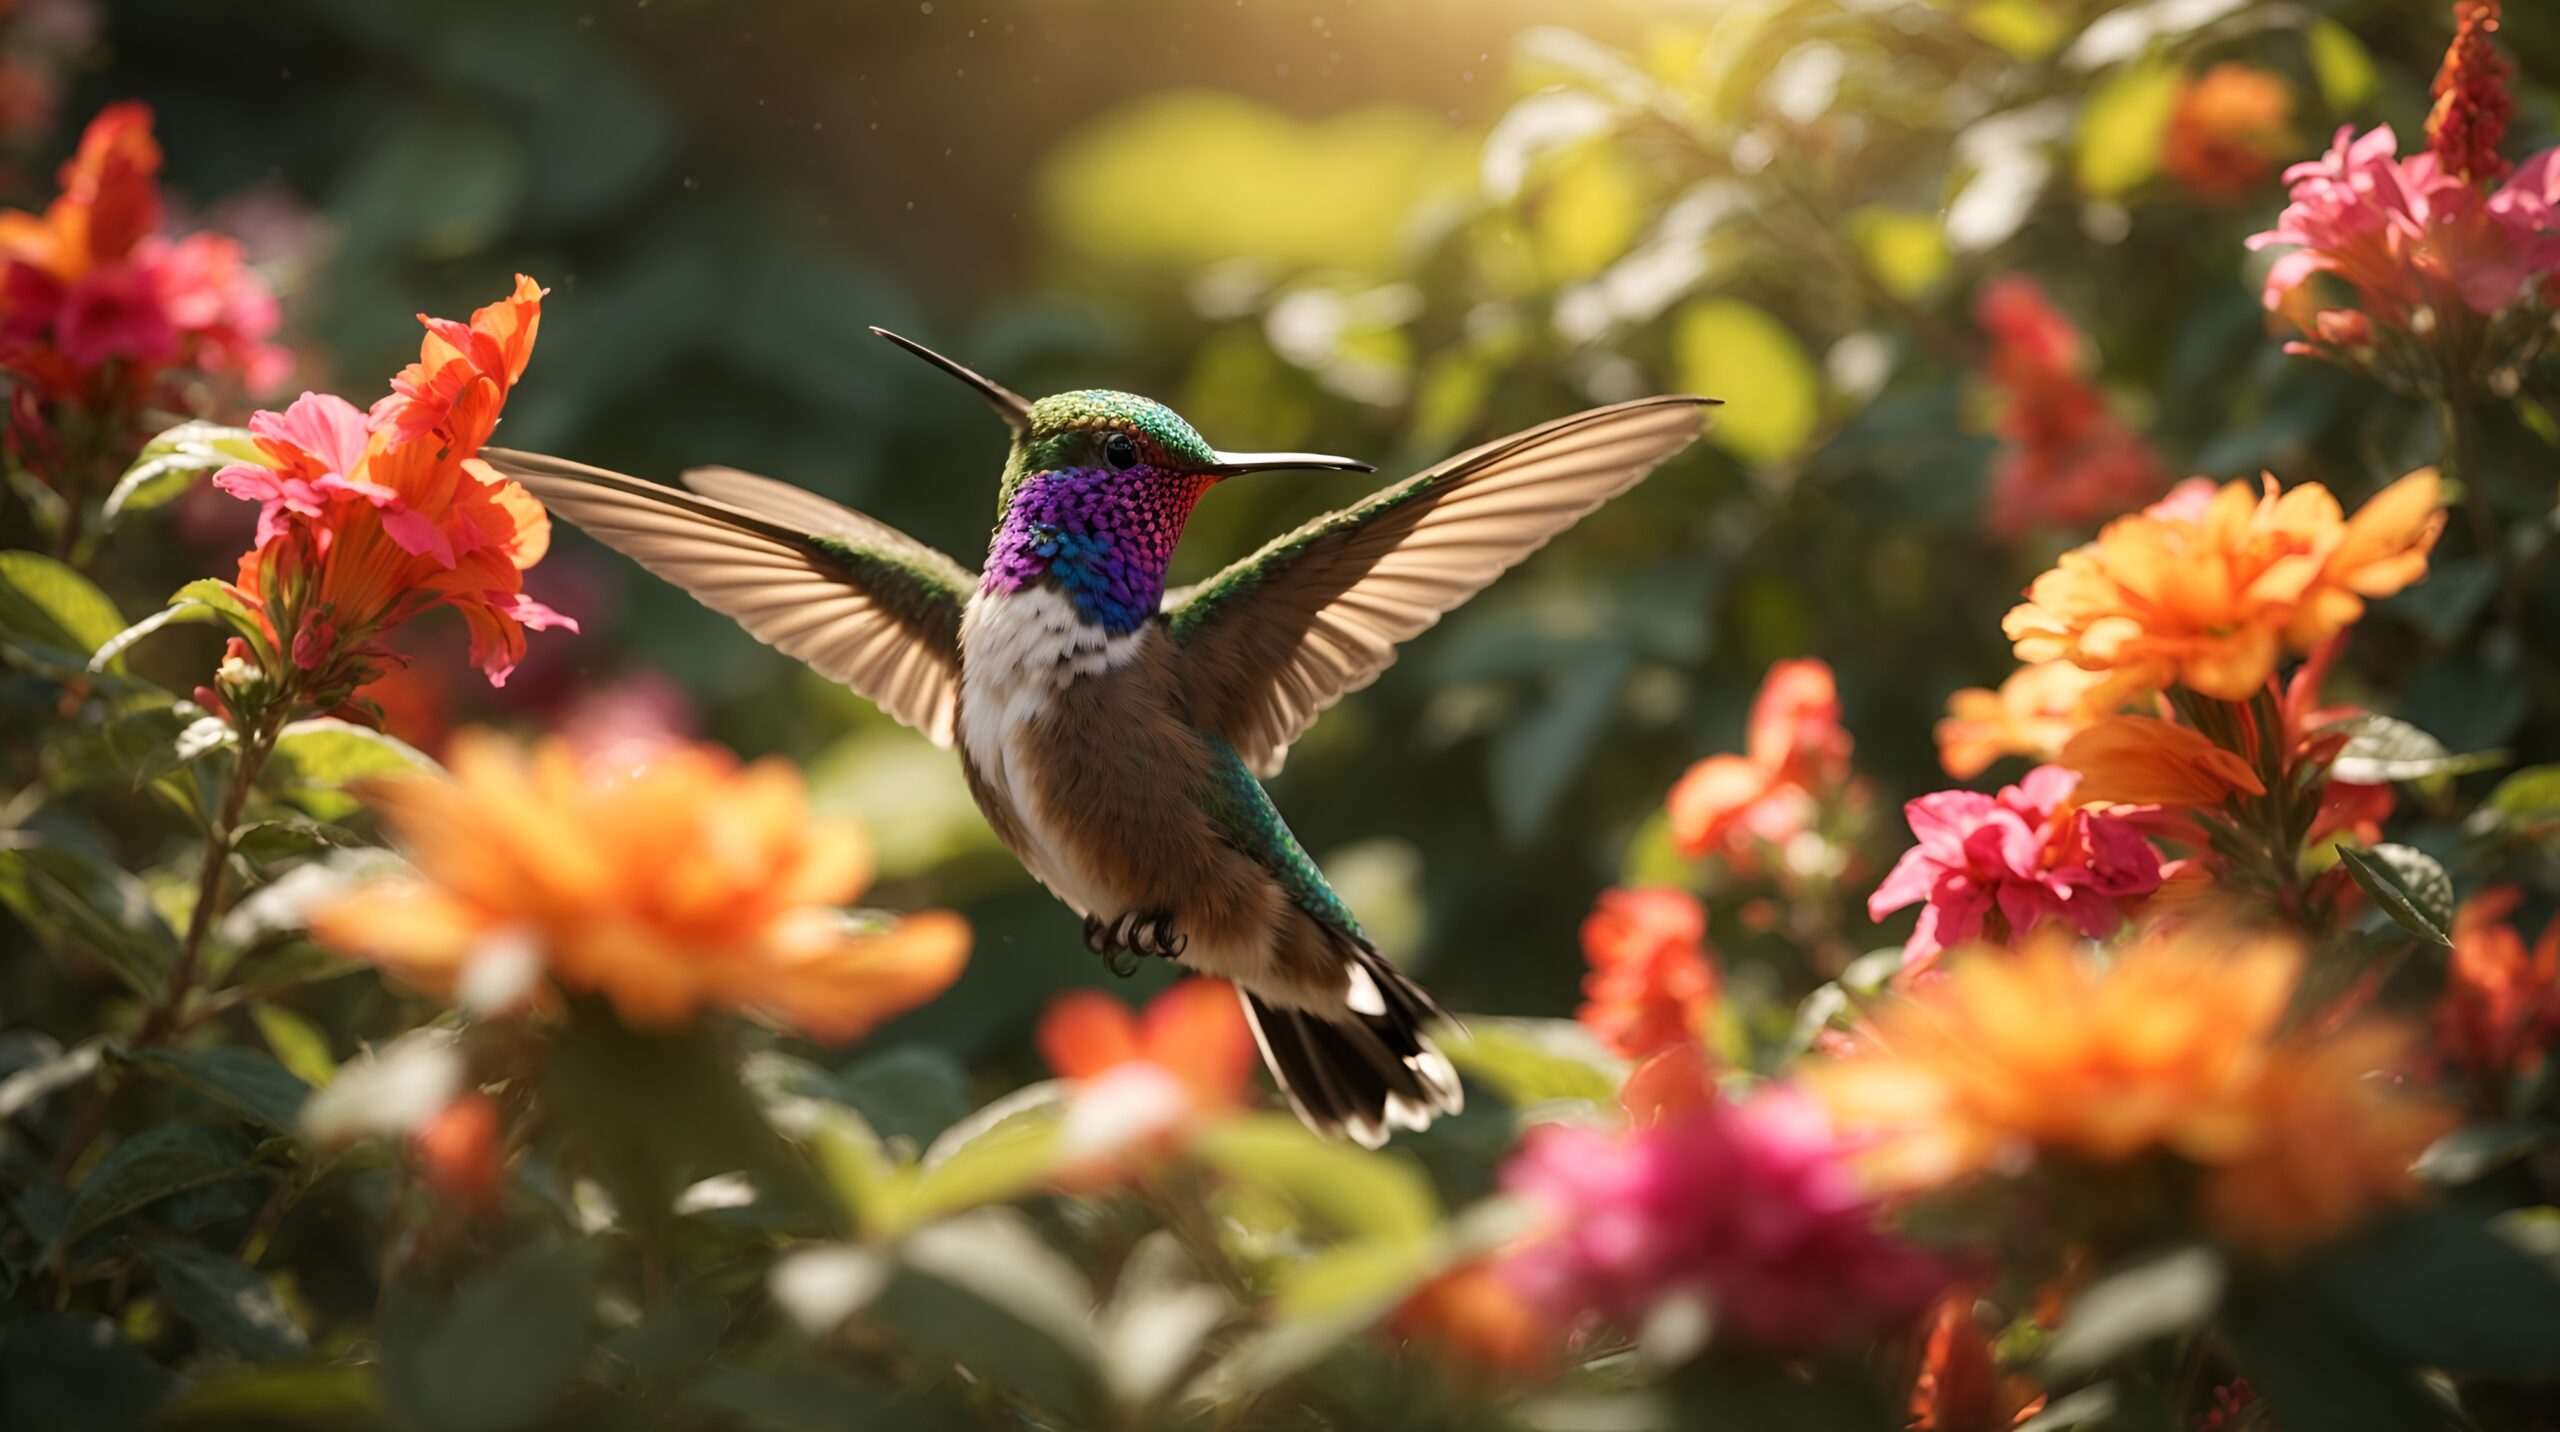 A vibrant hummingbird darting swiftly between flowers